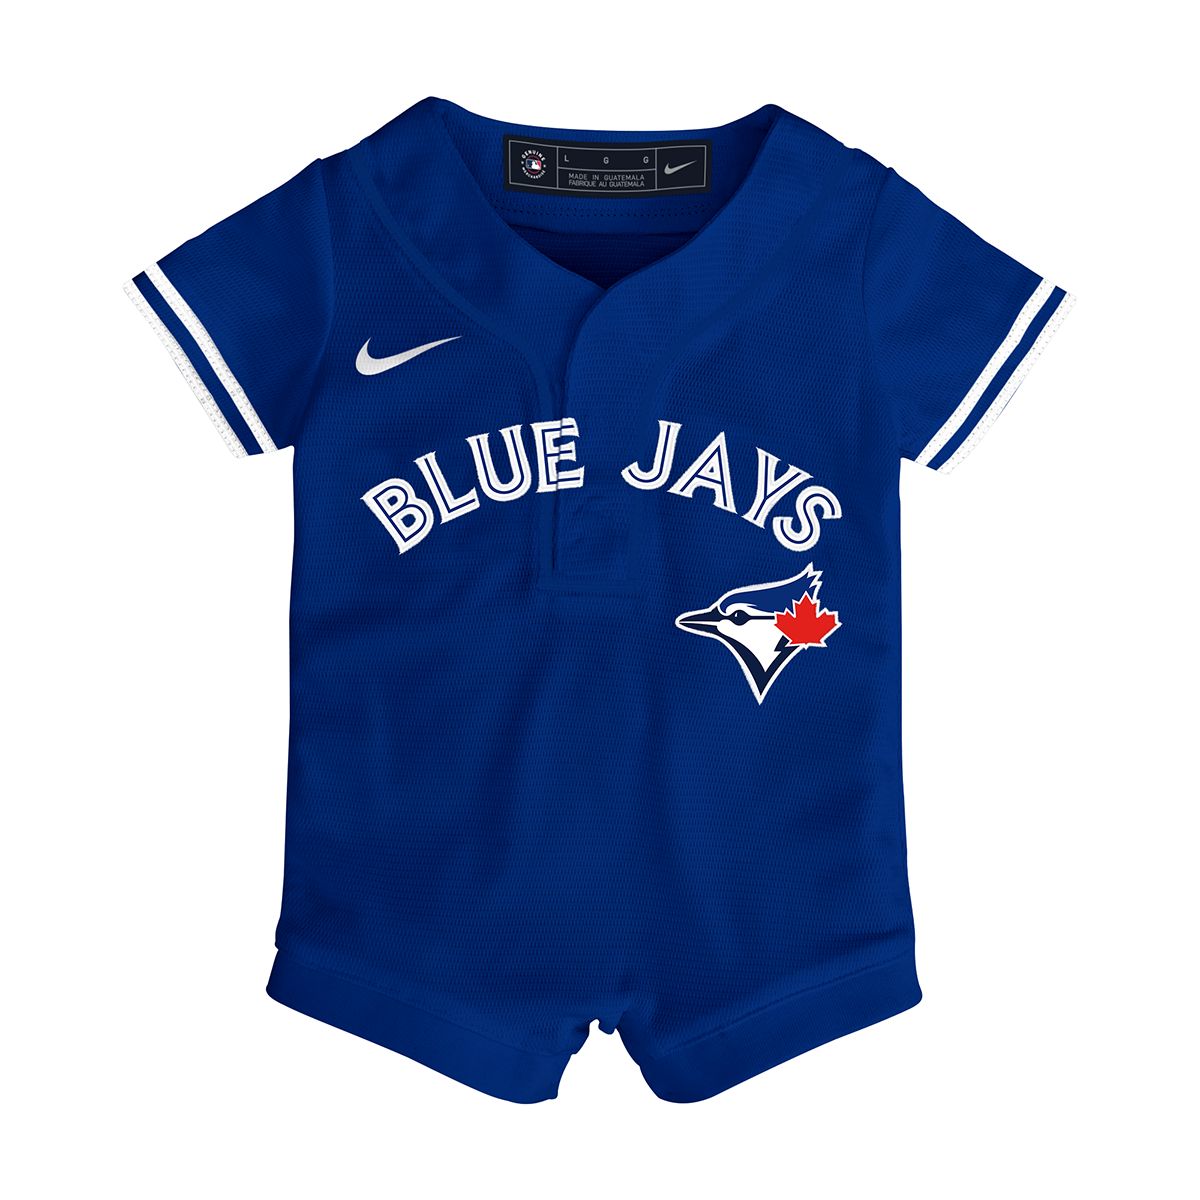 Toronto Blue Jays Outerstuff Replica Romper Jersey, Baby, Baseball, MLB